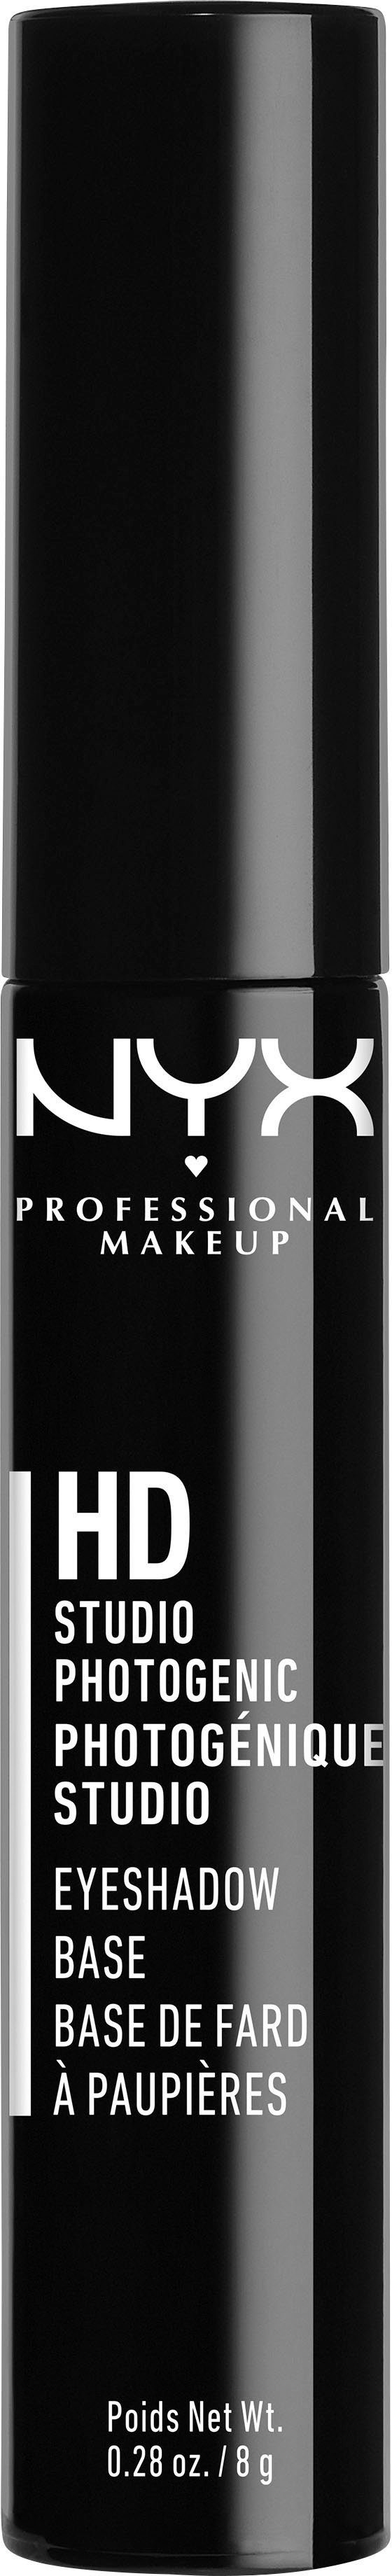 Lidschatten-Base Eye NYX Base Shadow Makeup Professional